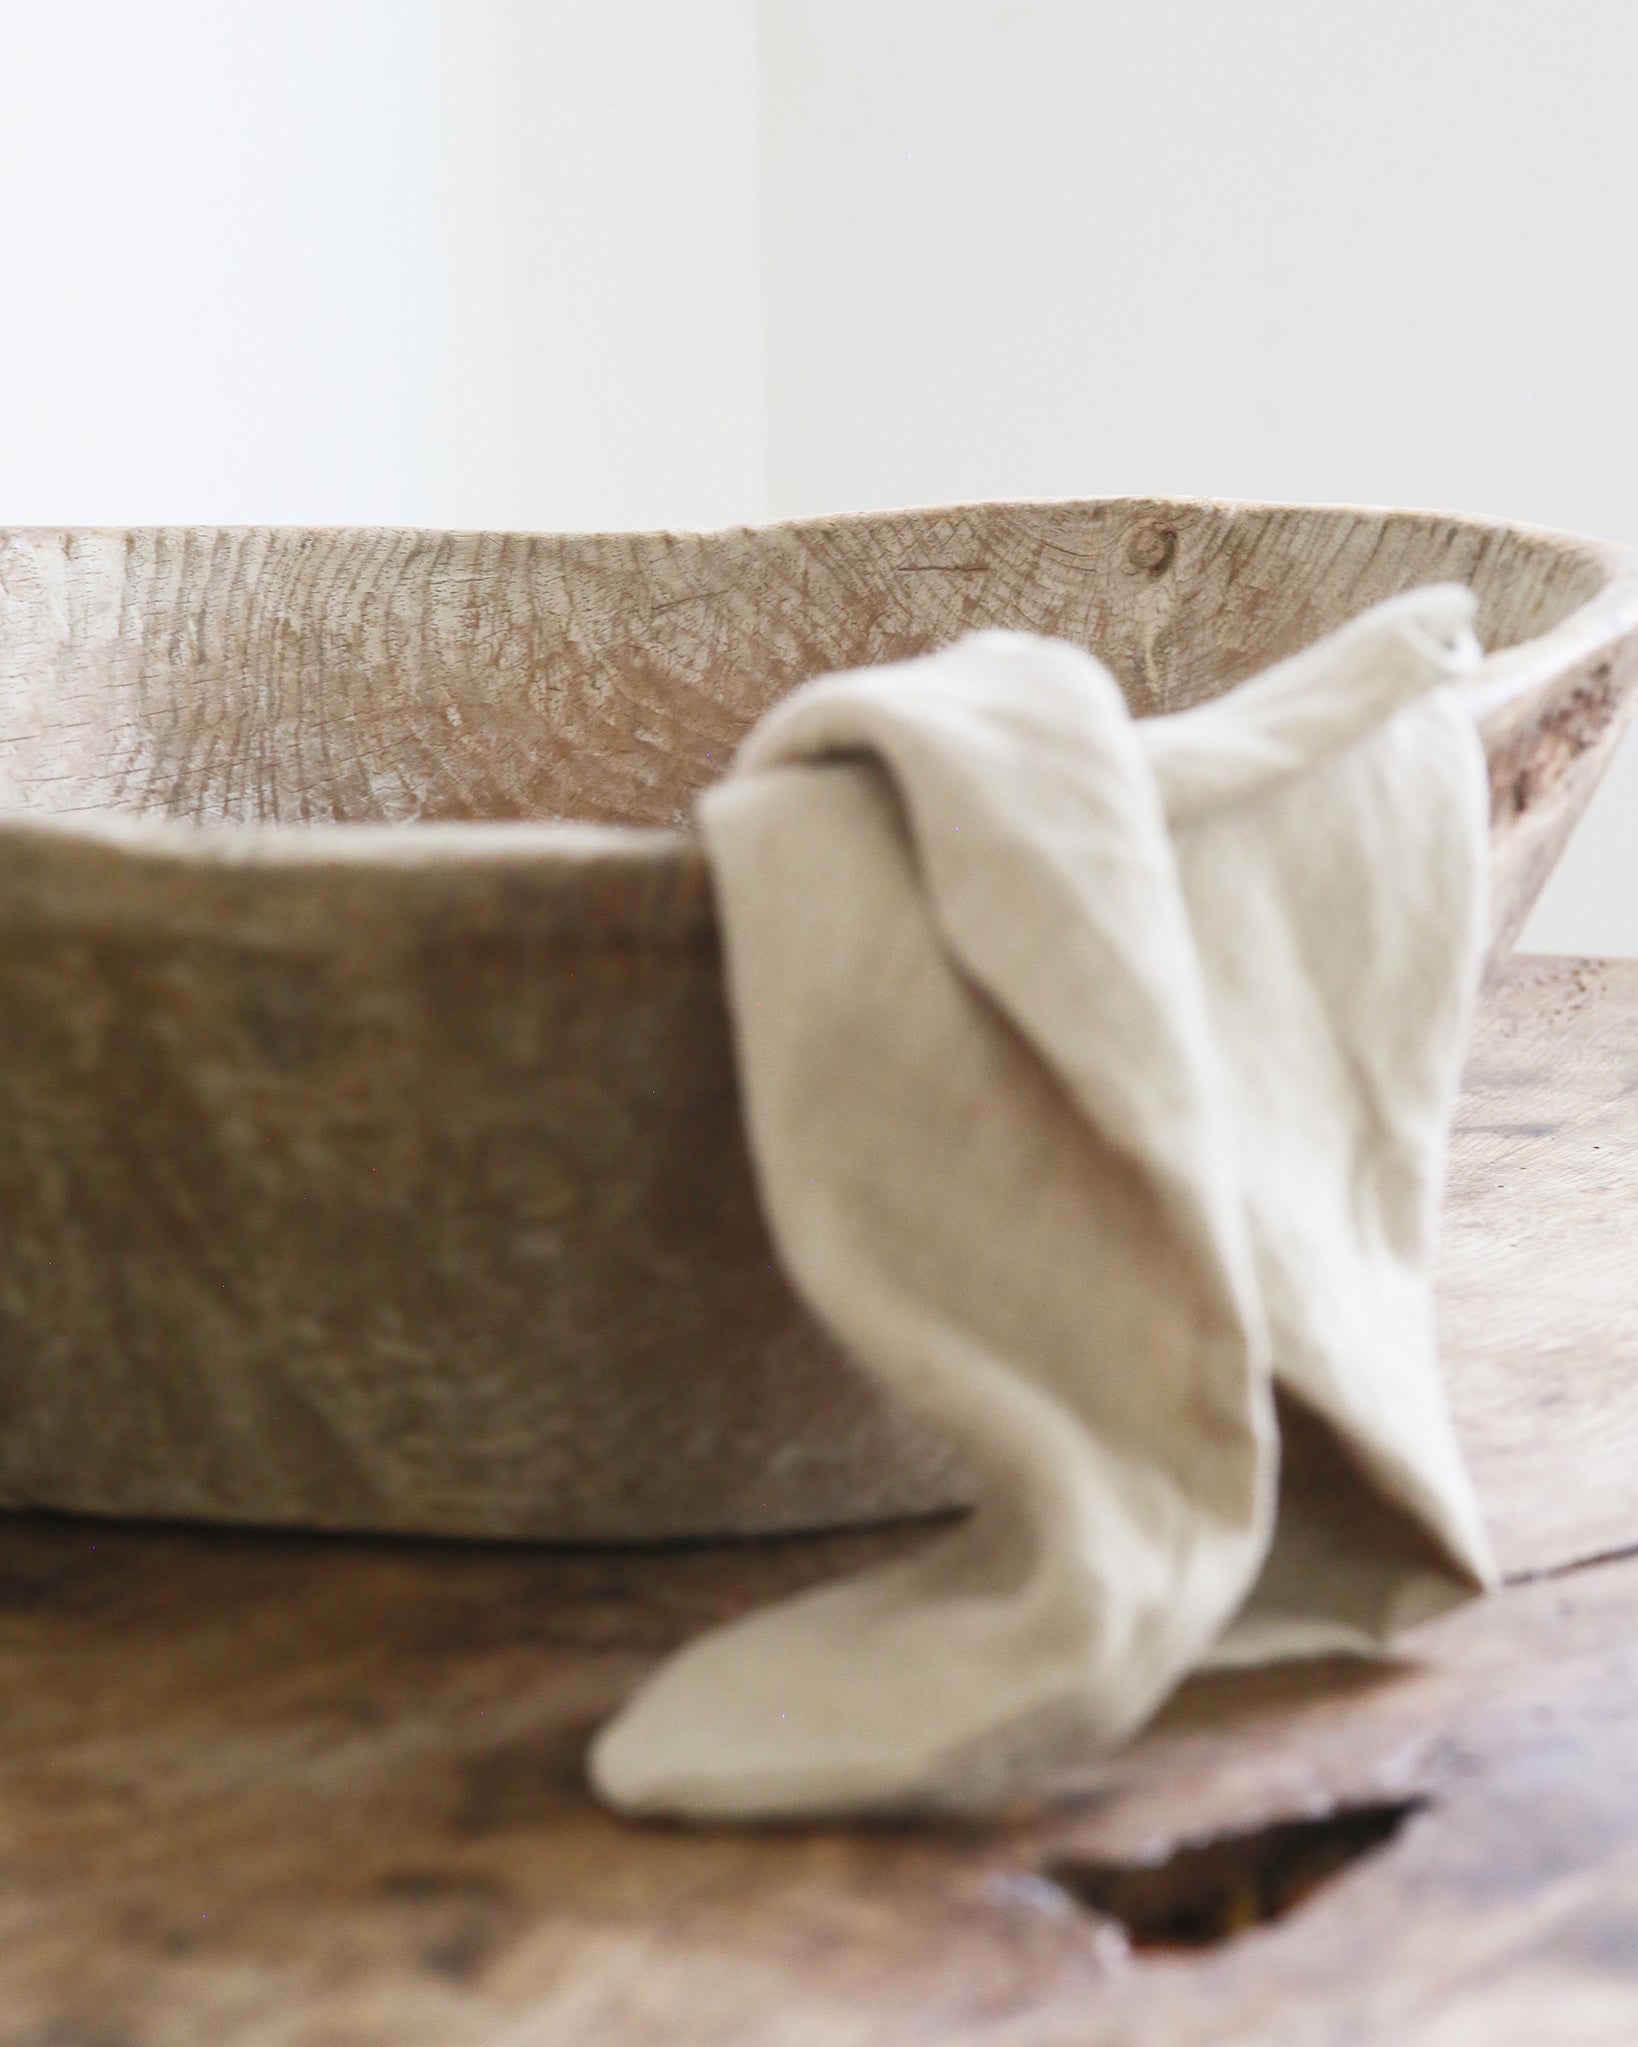 Rustic wooden dough bowl with tea towel